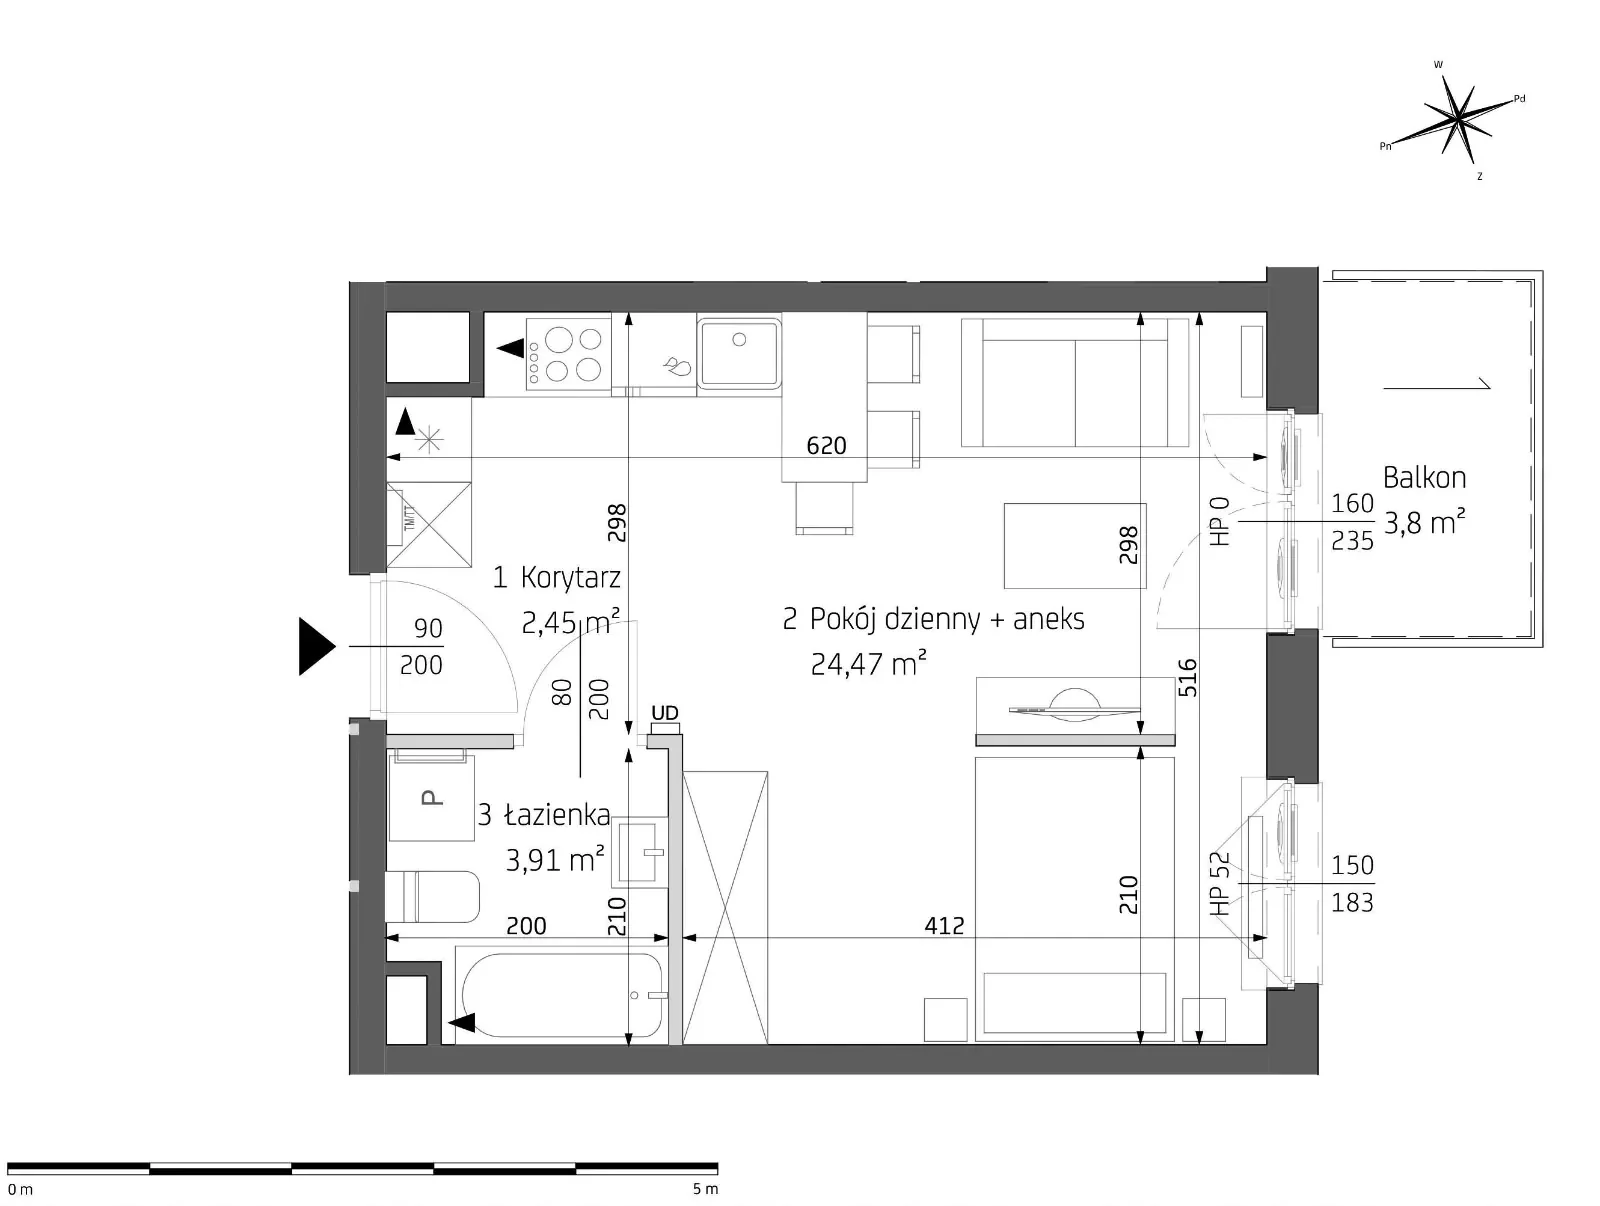 Mieszkanie 30,83 m², piętro 5, oferta nr B3/5/A20, Bemowo Vita, Warszawa, Bemowo, Chrzanów, ul. Szeligowska 59